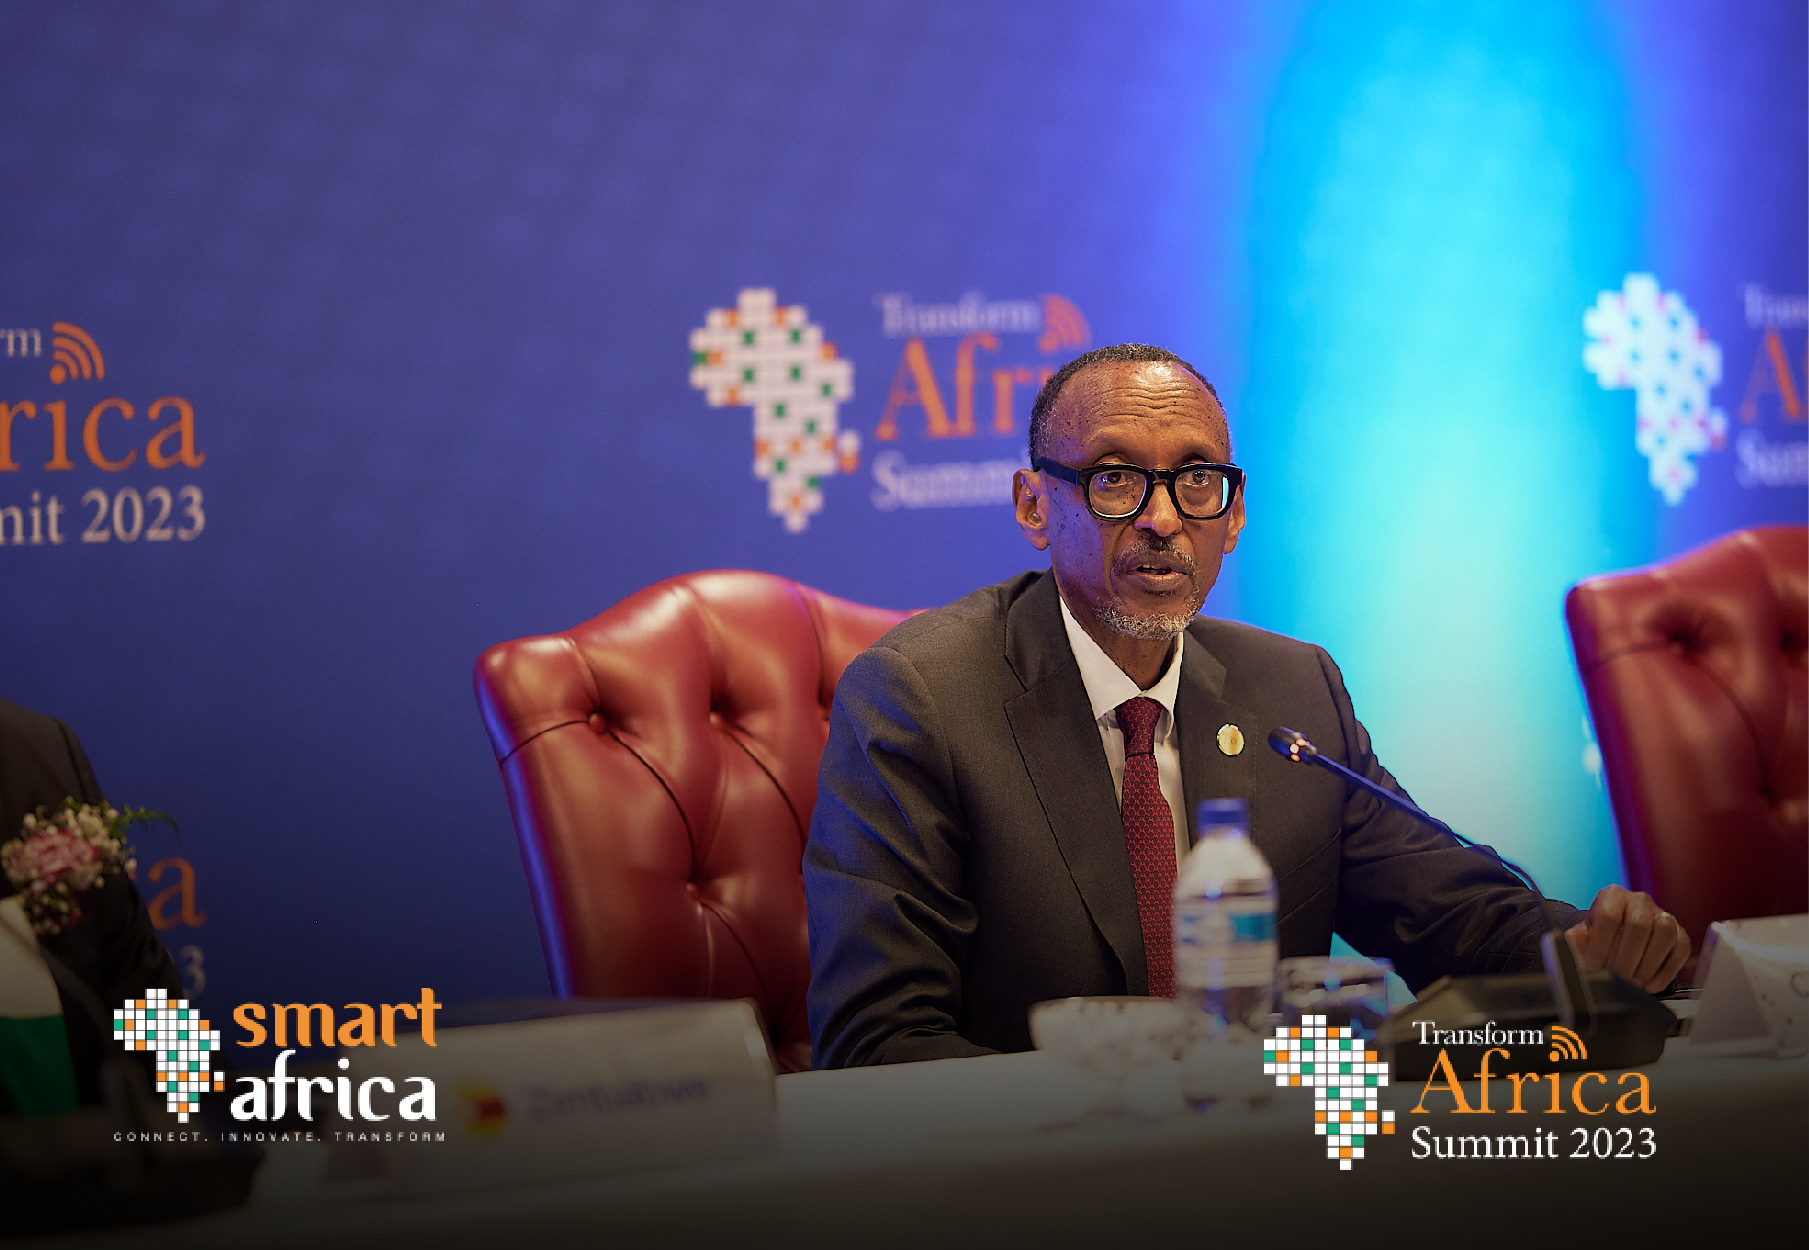 Rwanda’s President Hon. Paul Kagame speaking at the Transform Africa Summit 2023